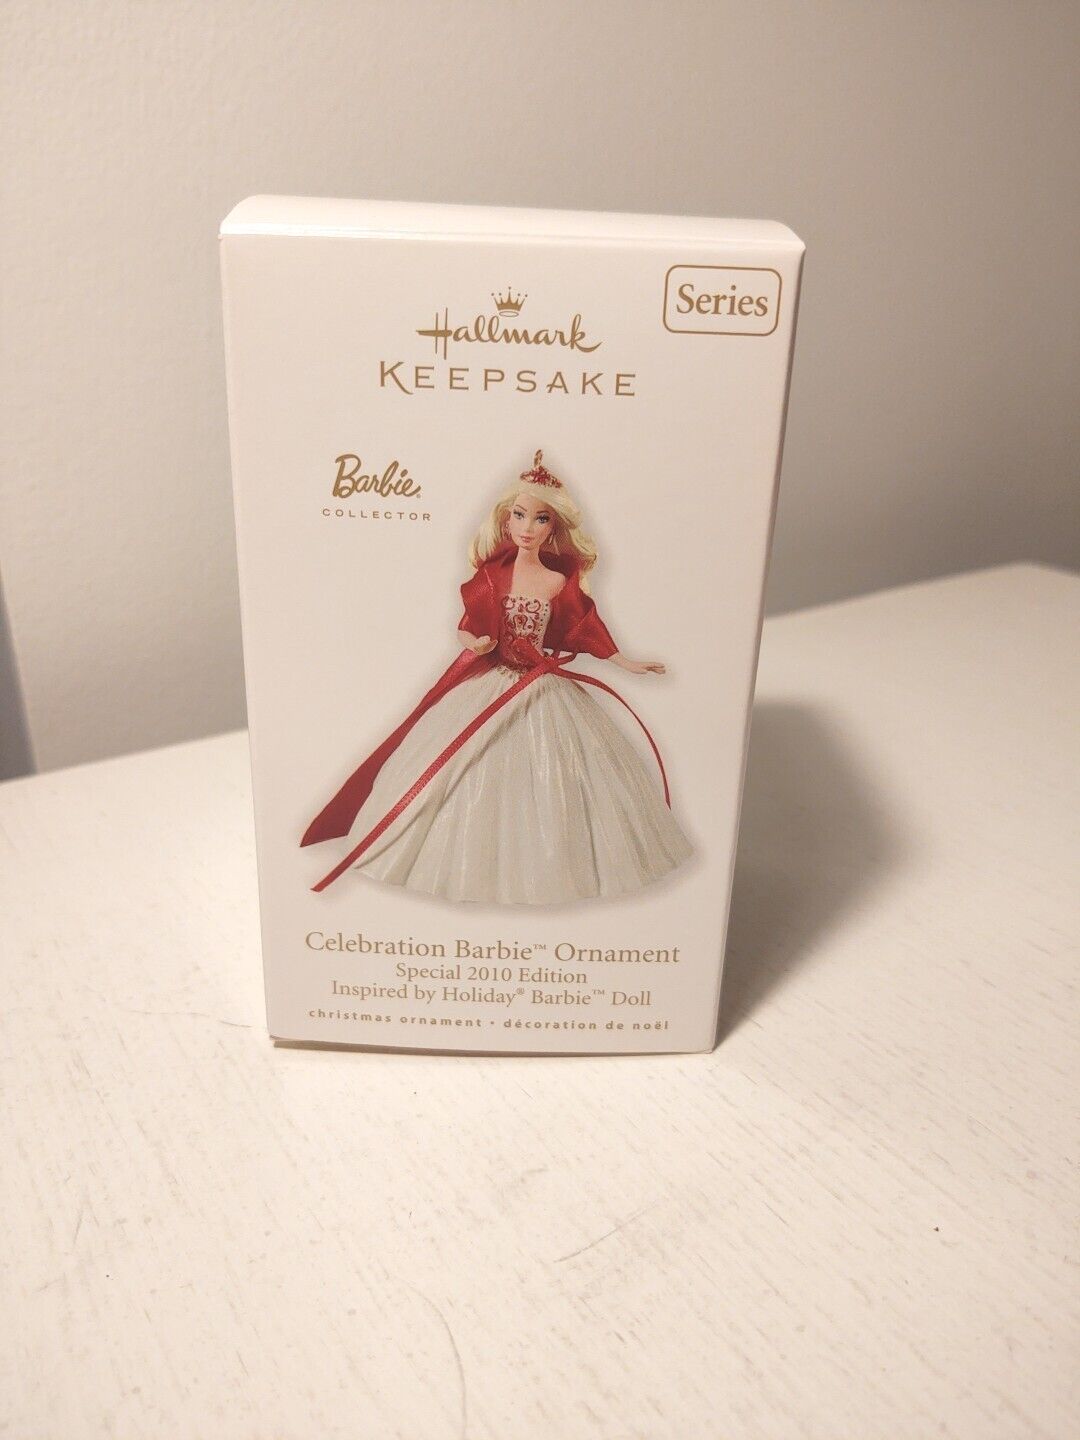 Hallmark Keepsake 2010 Celebration Barbie Ornament #11 In Series Red & White